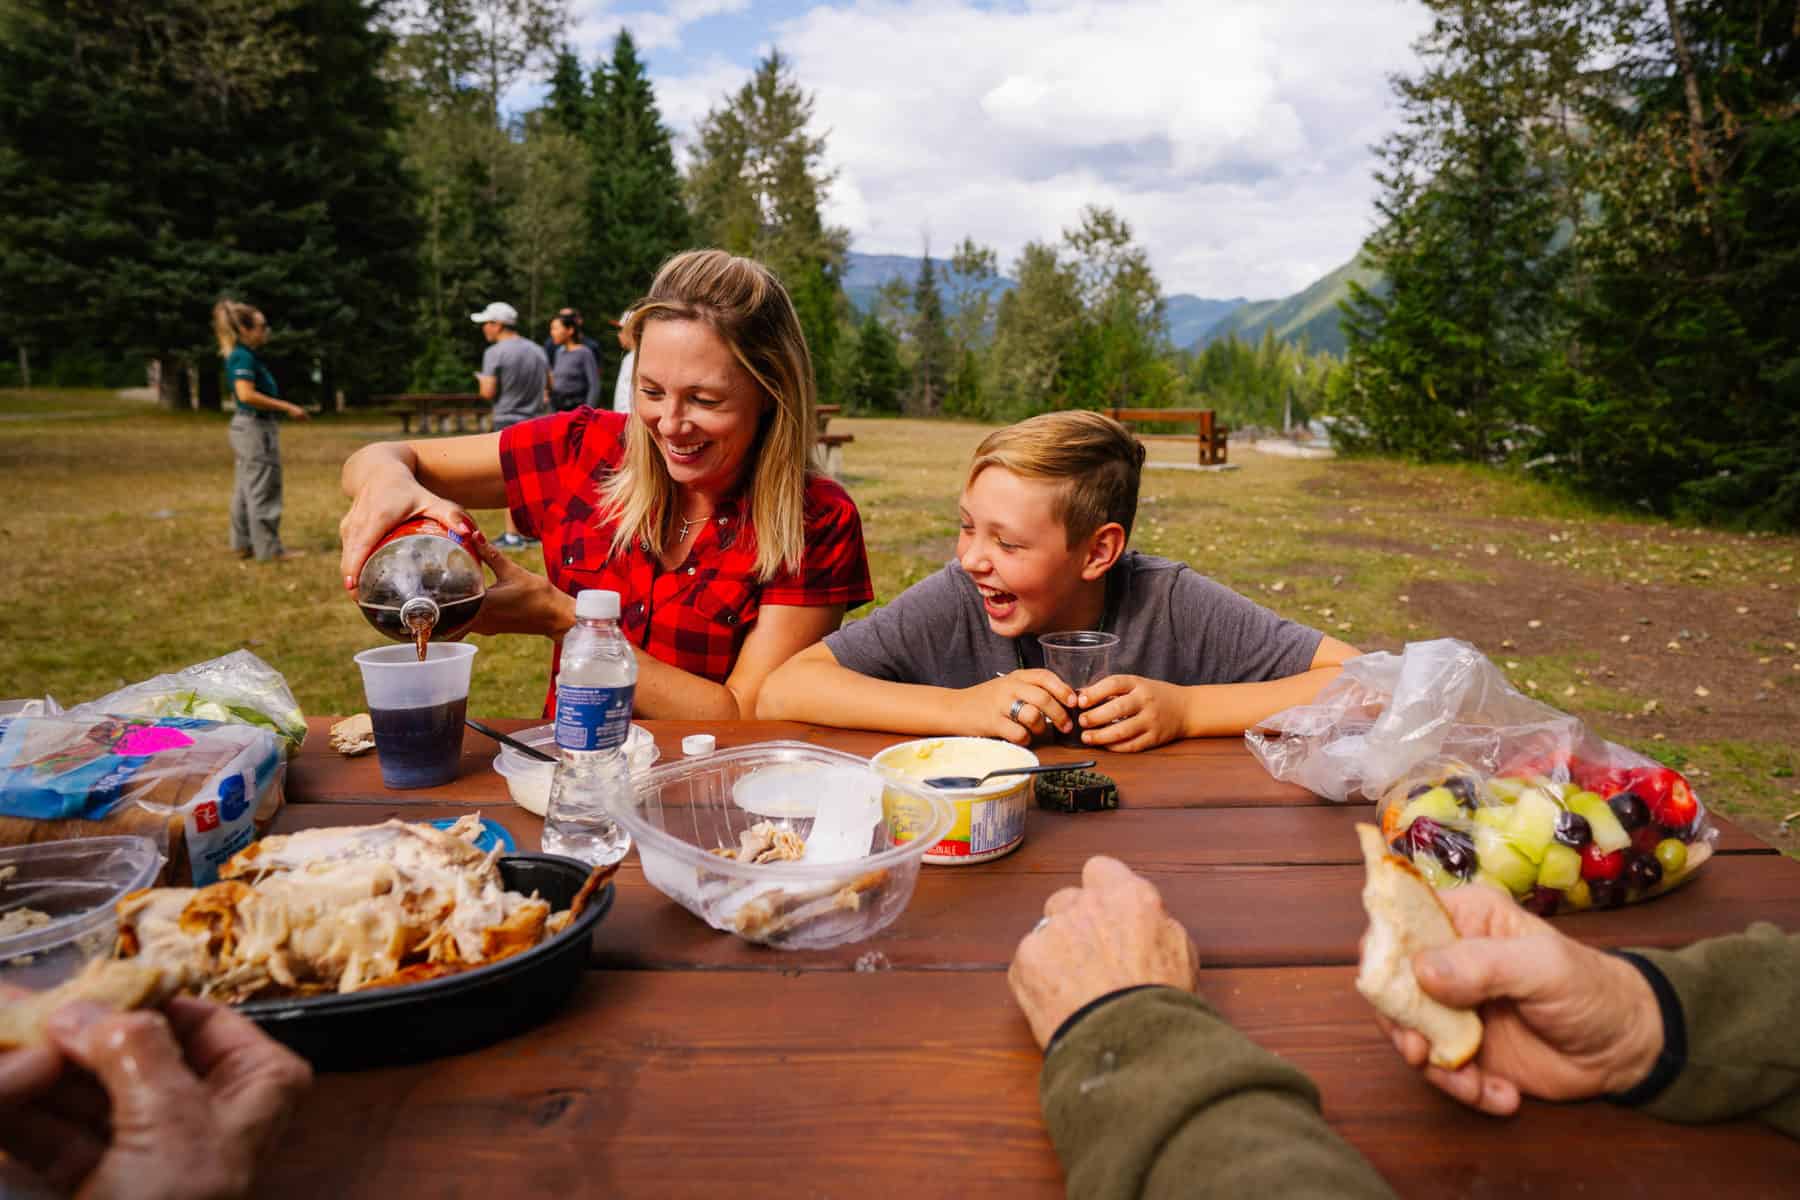 family at skunk cabbage board walk having a picnic